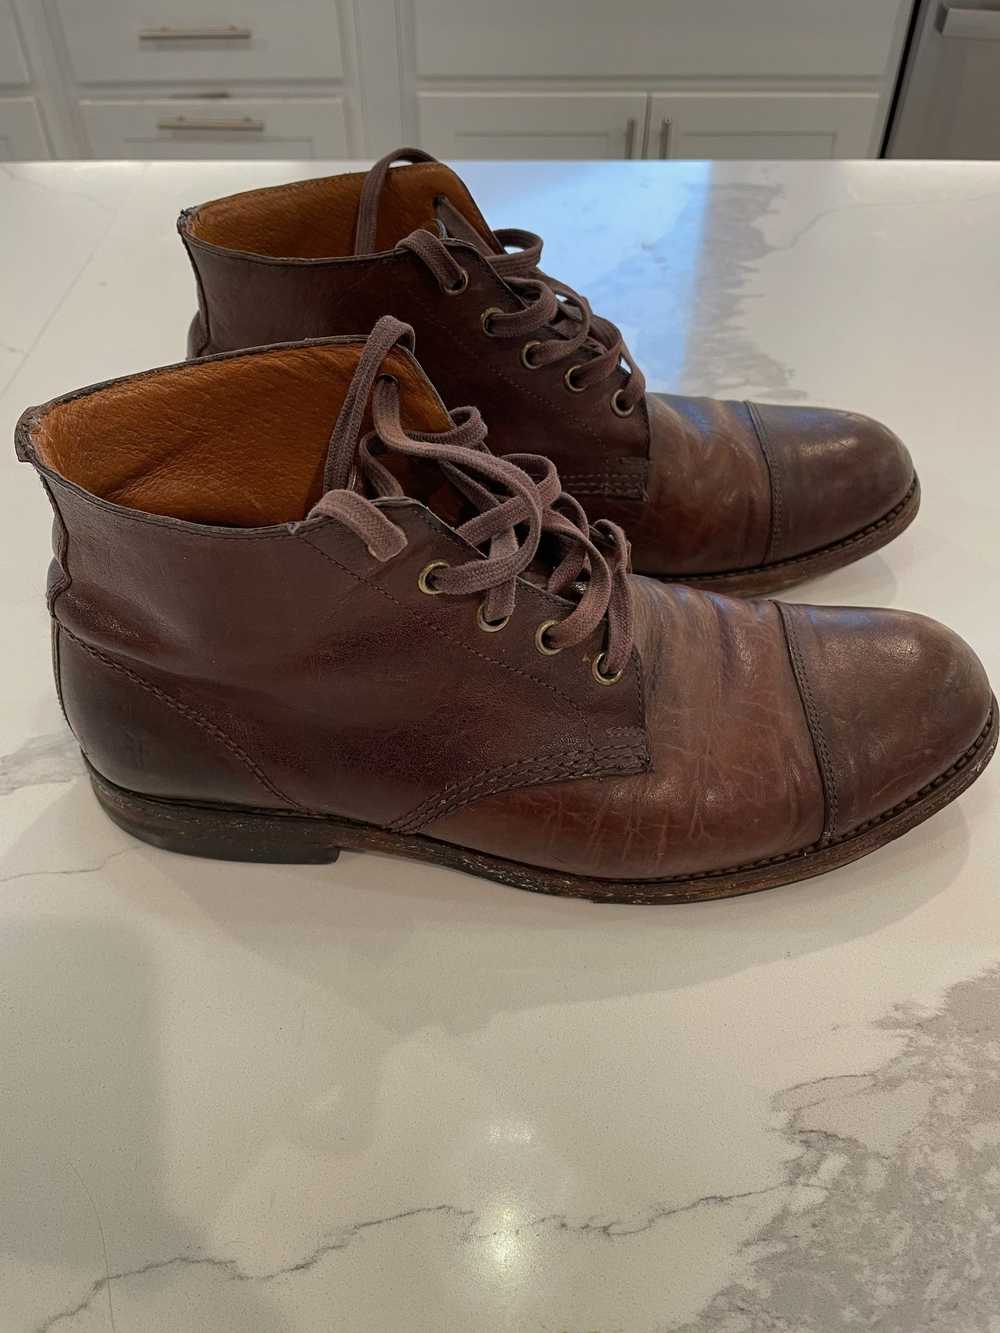 Frye Frye Leather Boots - image 3